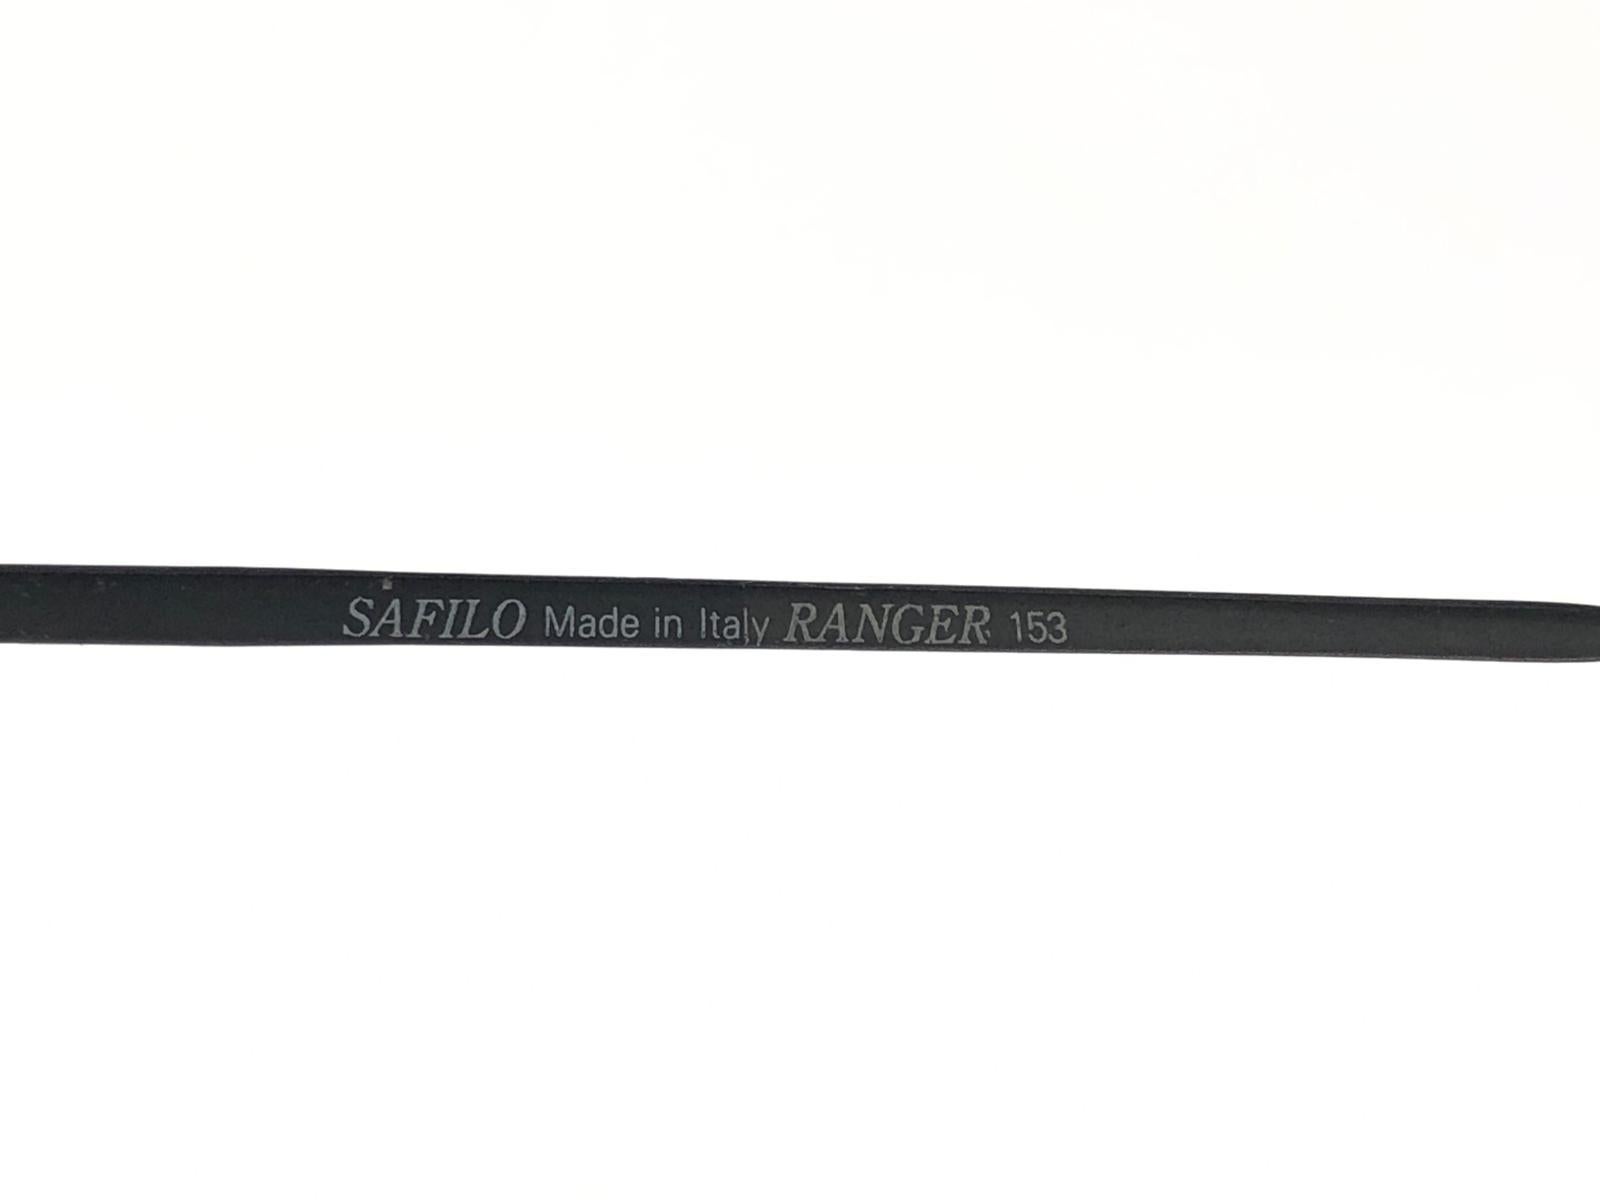 New Vintage Safilo Ranger 153 Gun Metal Aviator 1980's Sunglasses Made in Italy For Sale 1